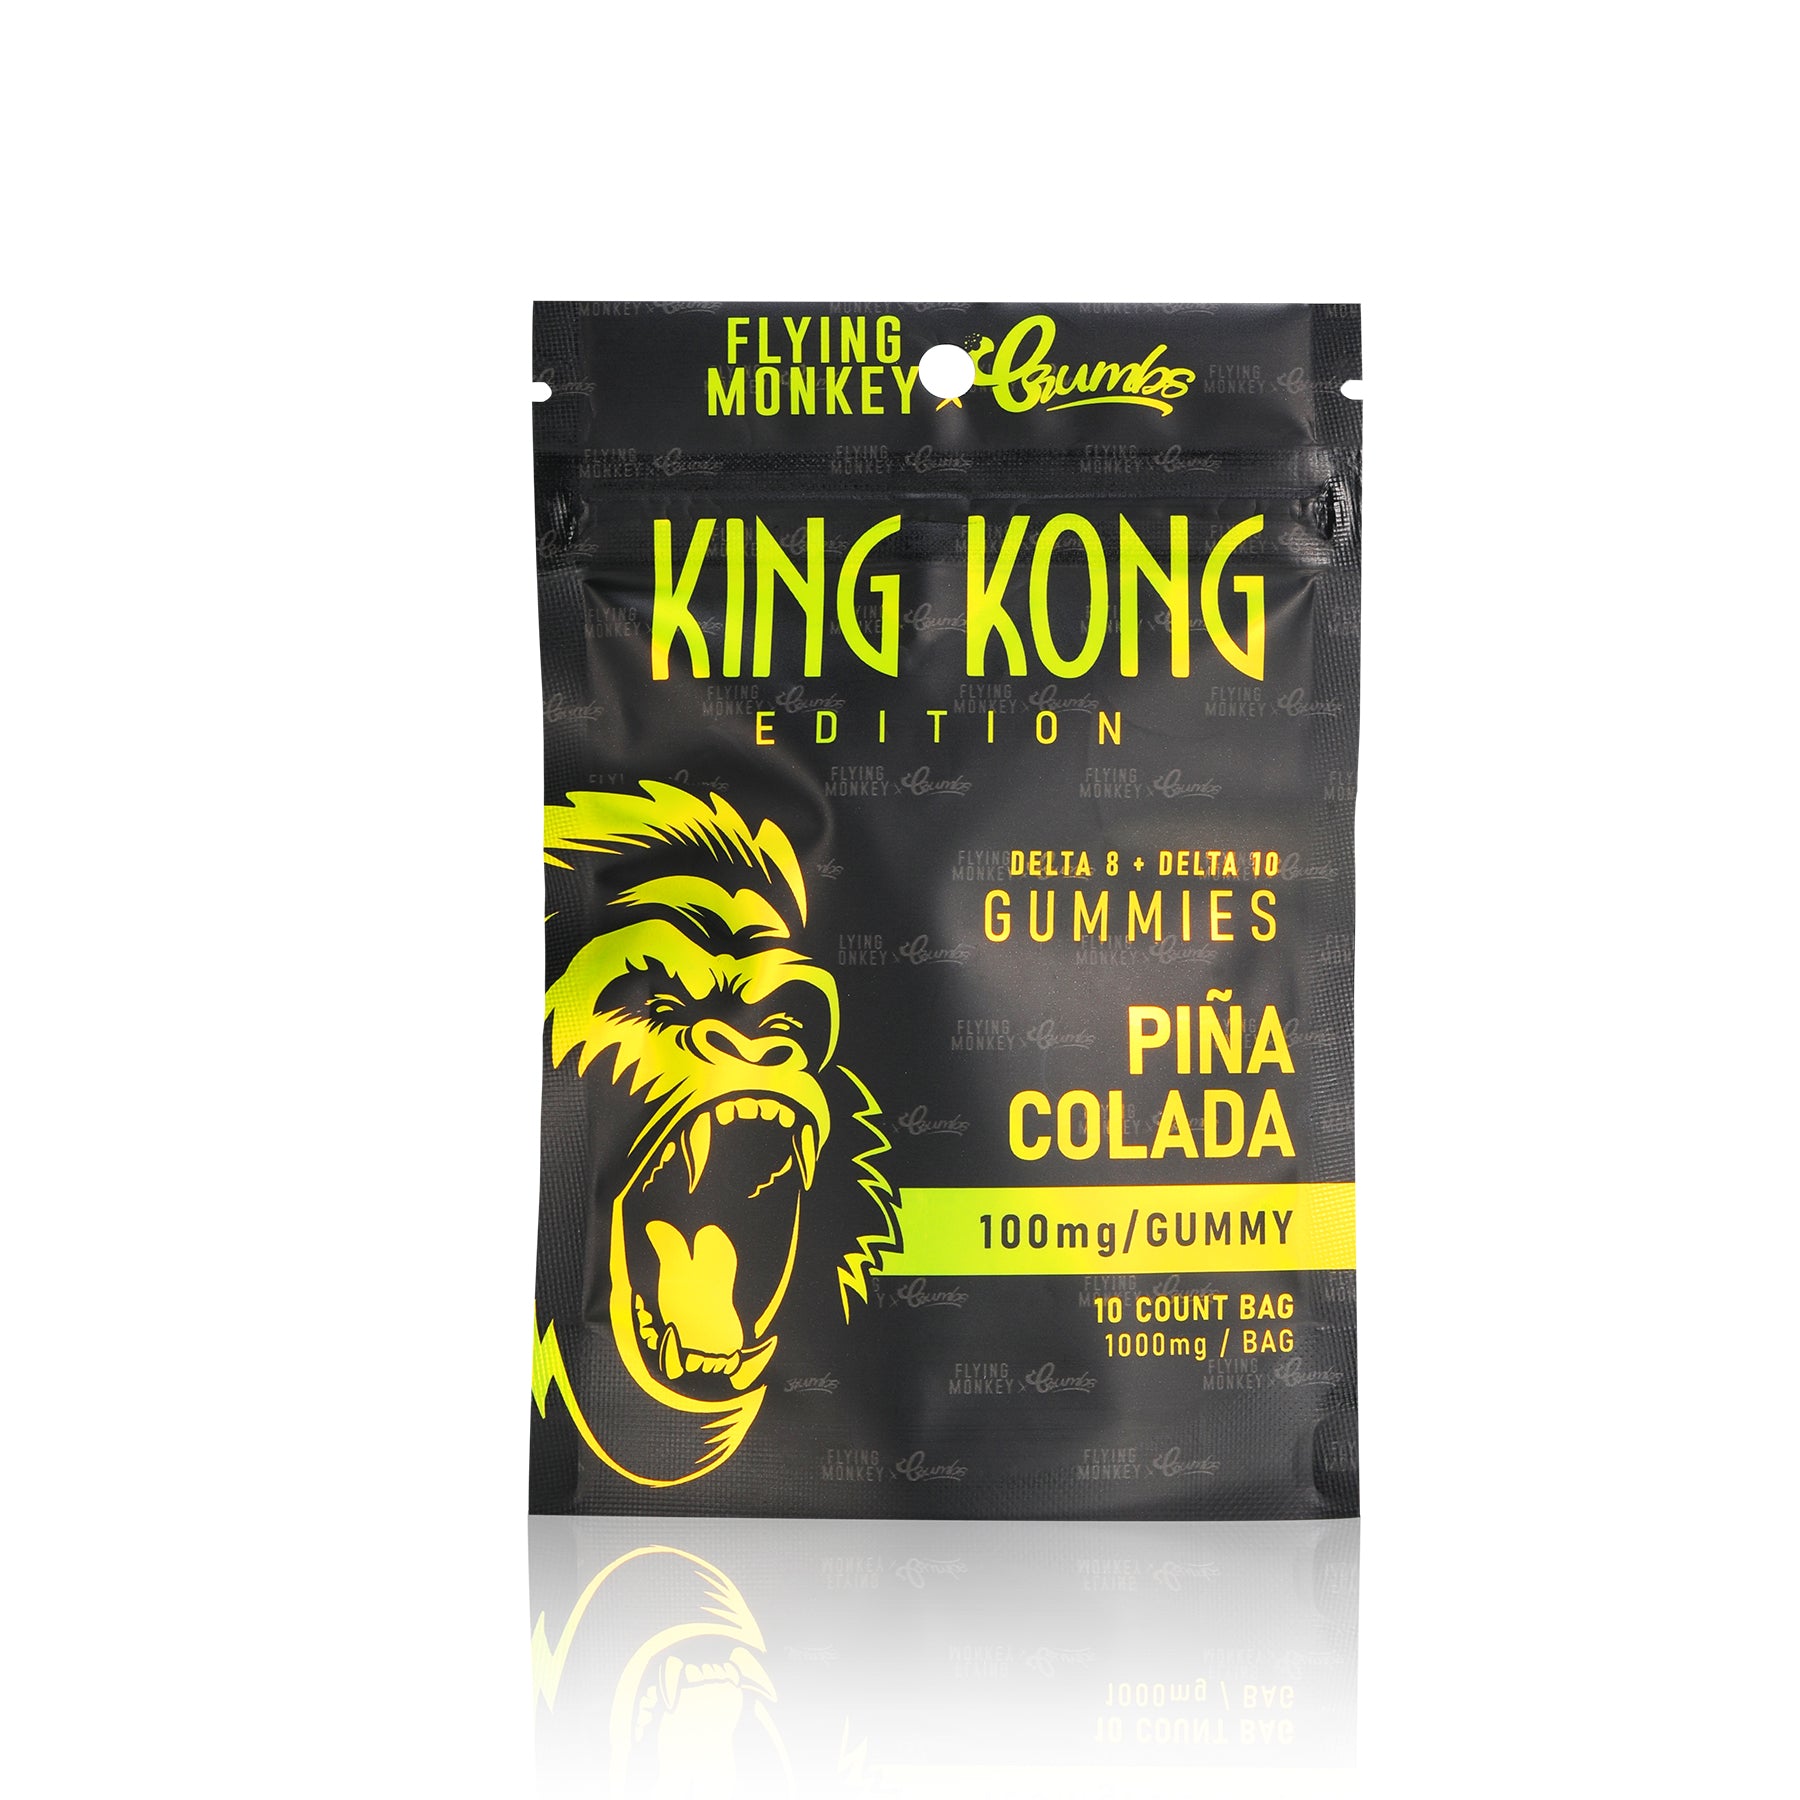 Flying Monkey King Kong 100mg gummy bag in Pina Colada flavor